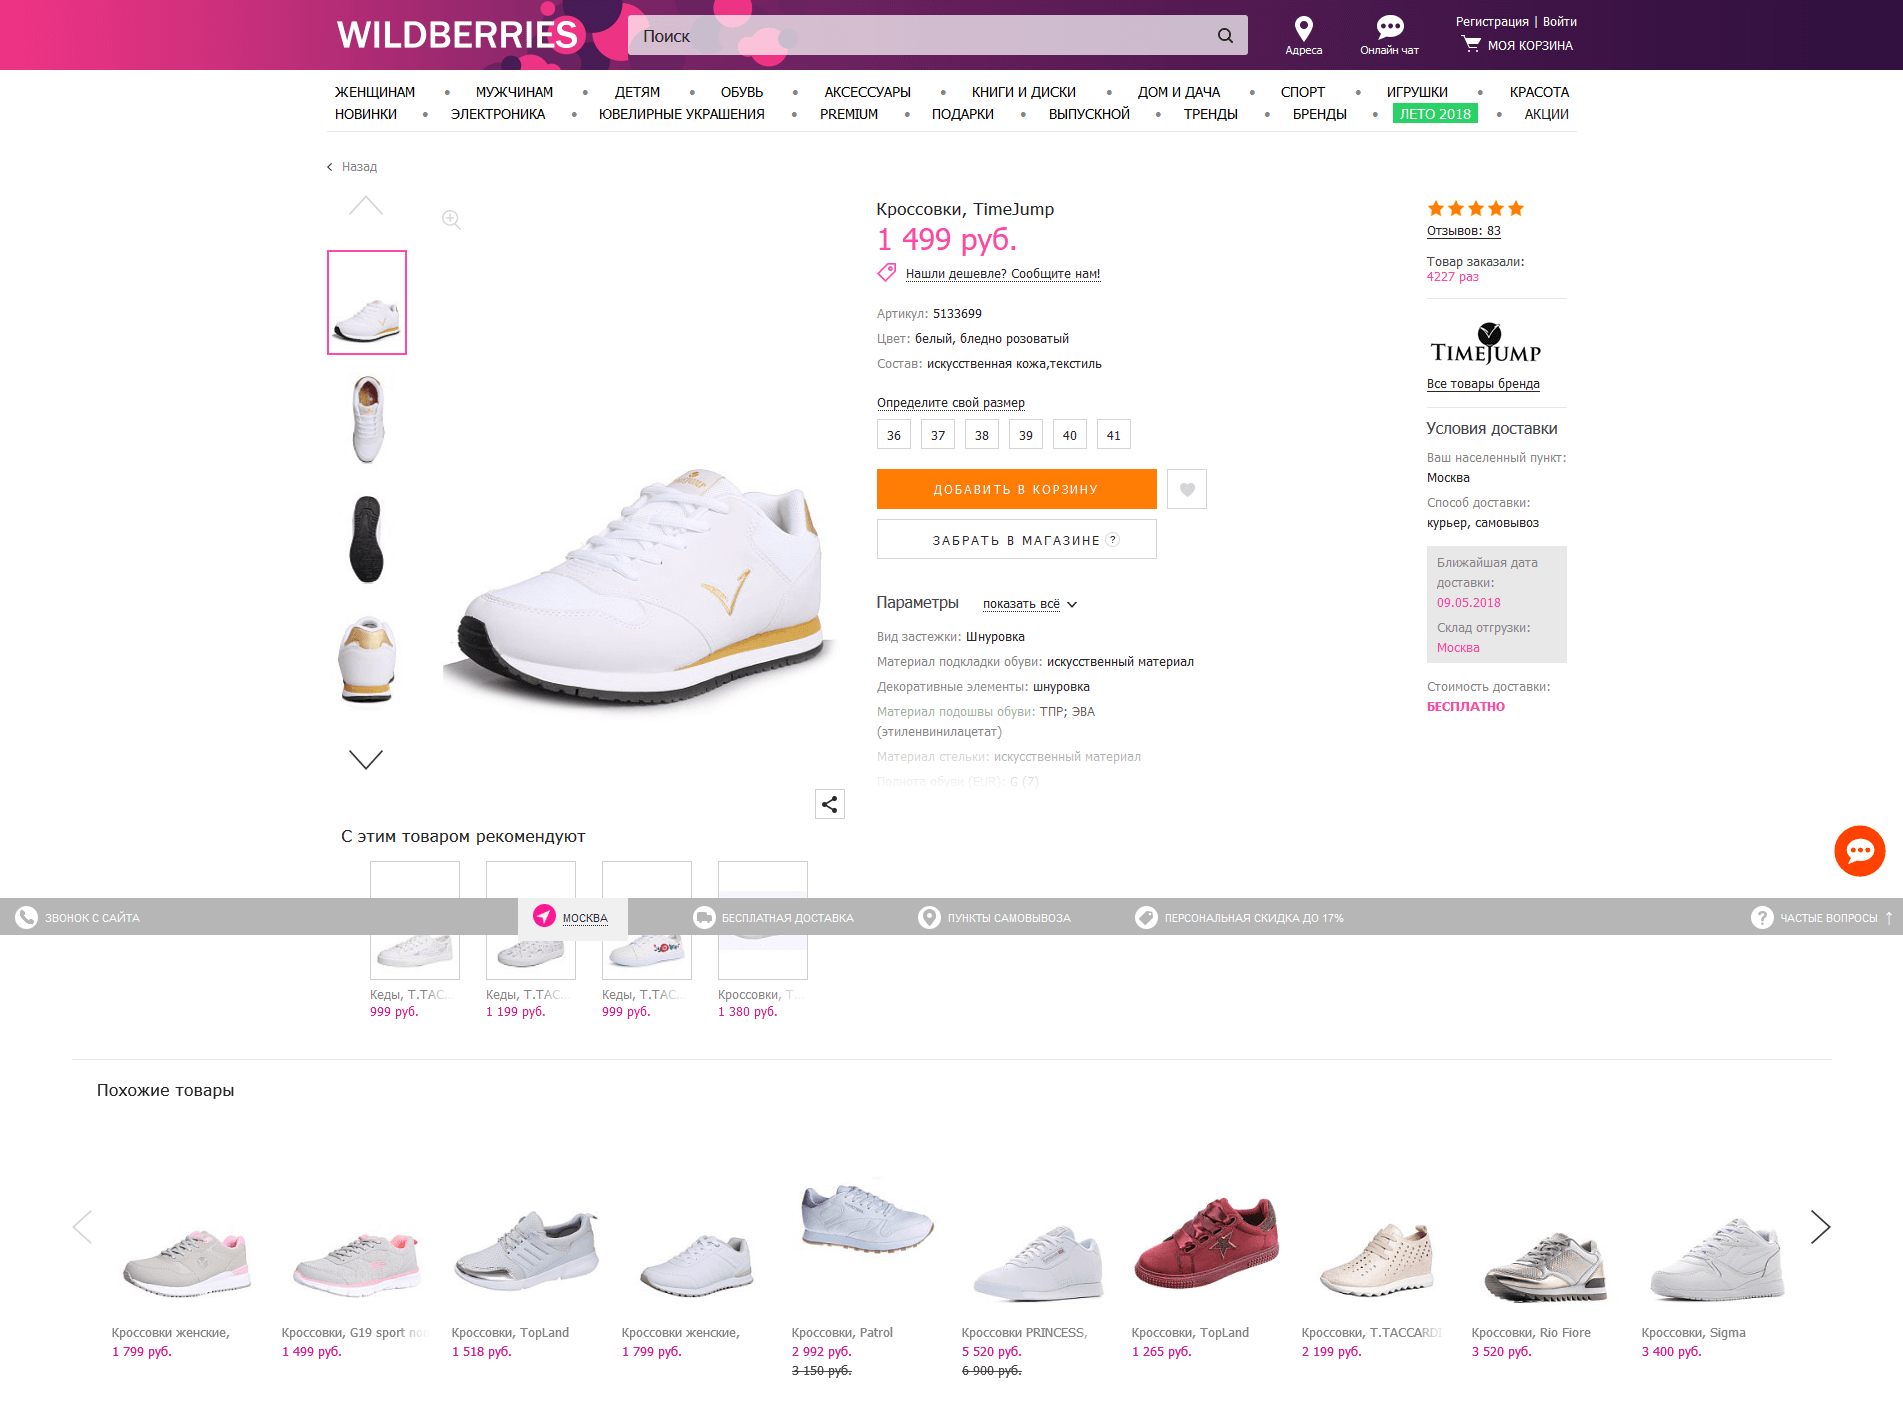 Страница товара по продаже обуви на сайте интернет-магазина wildberries.ru